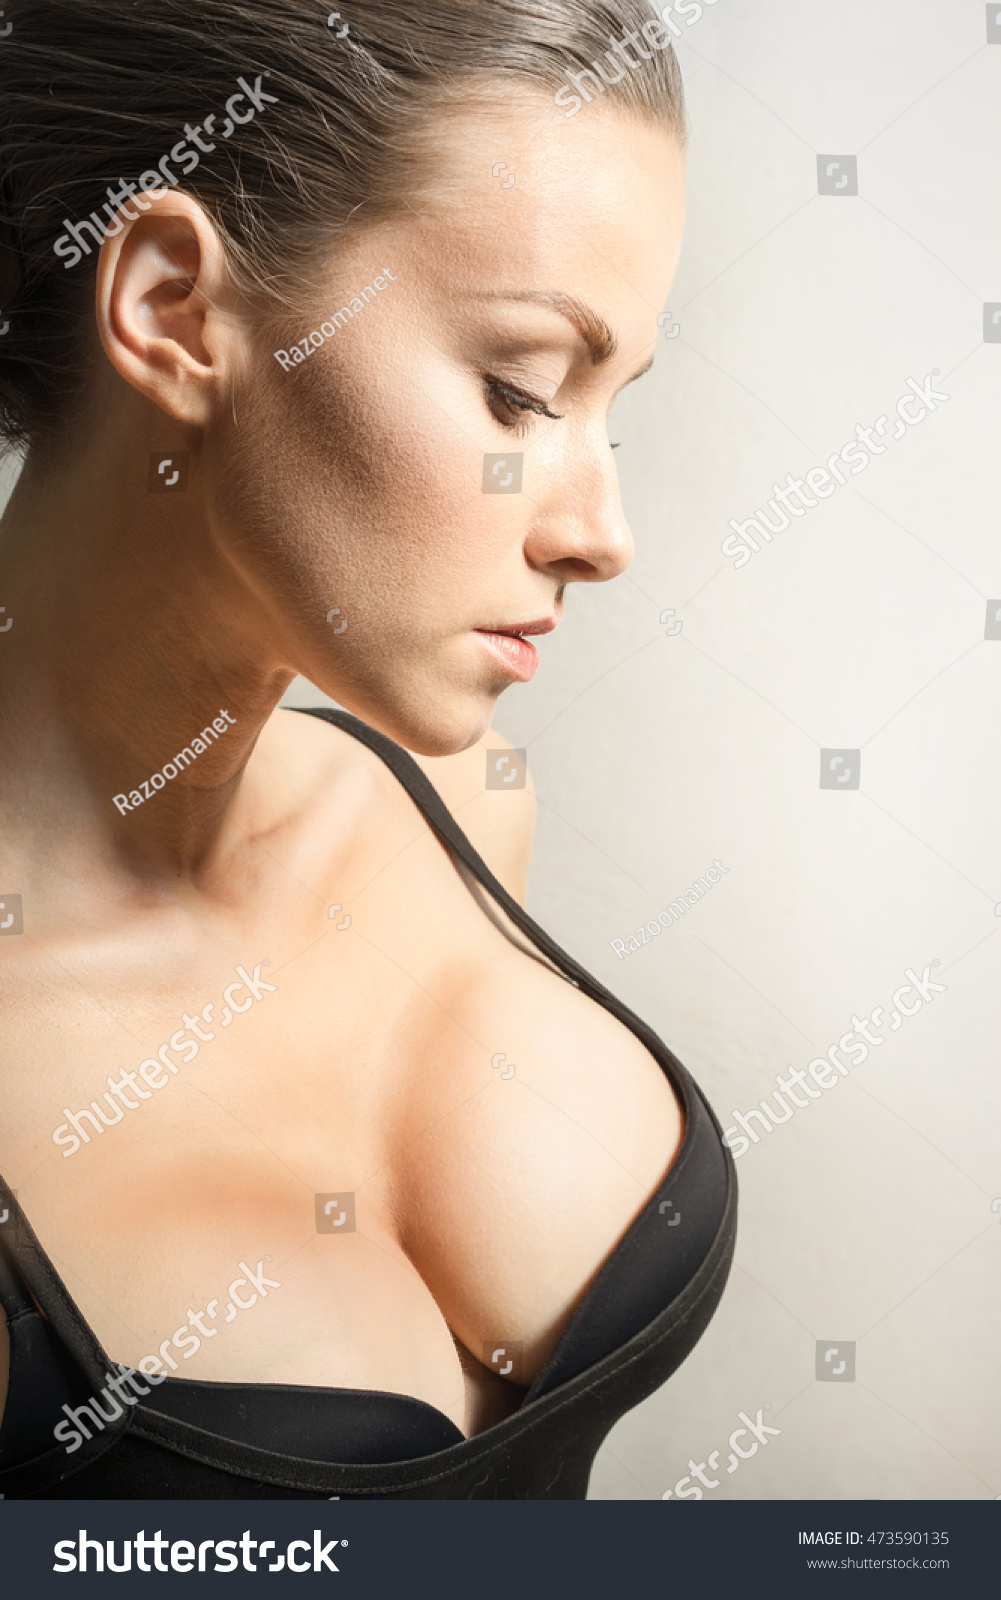 anna stahlman add beautiful large breasted women photo